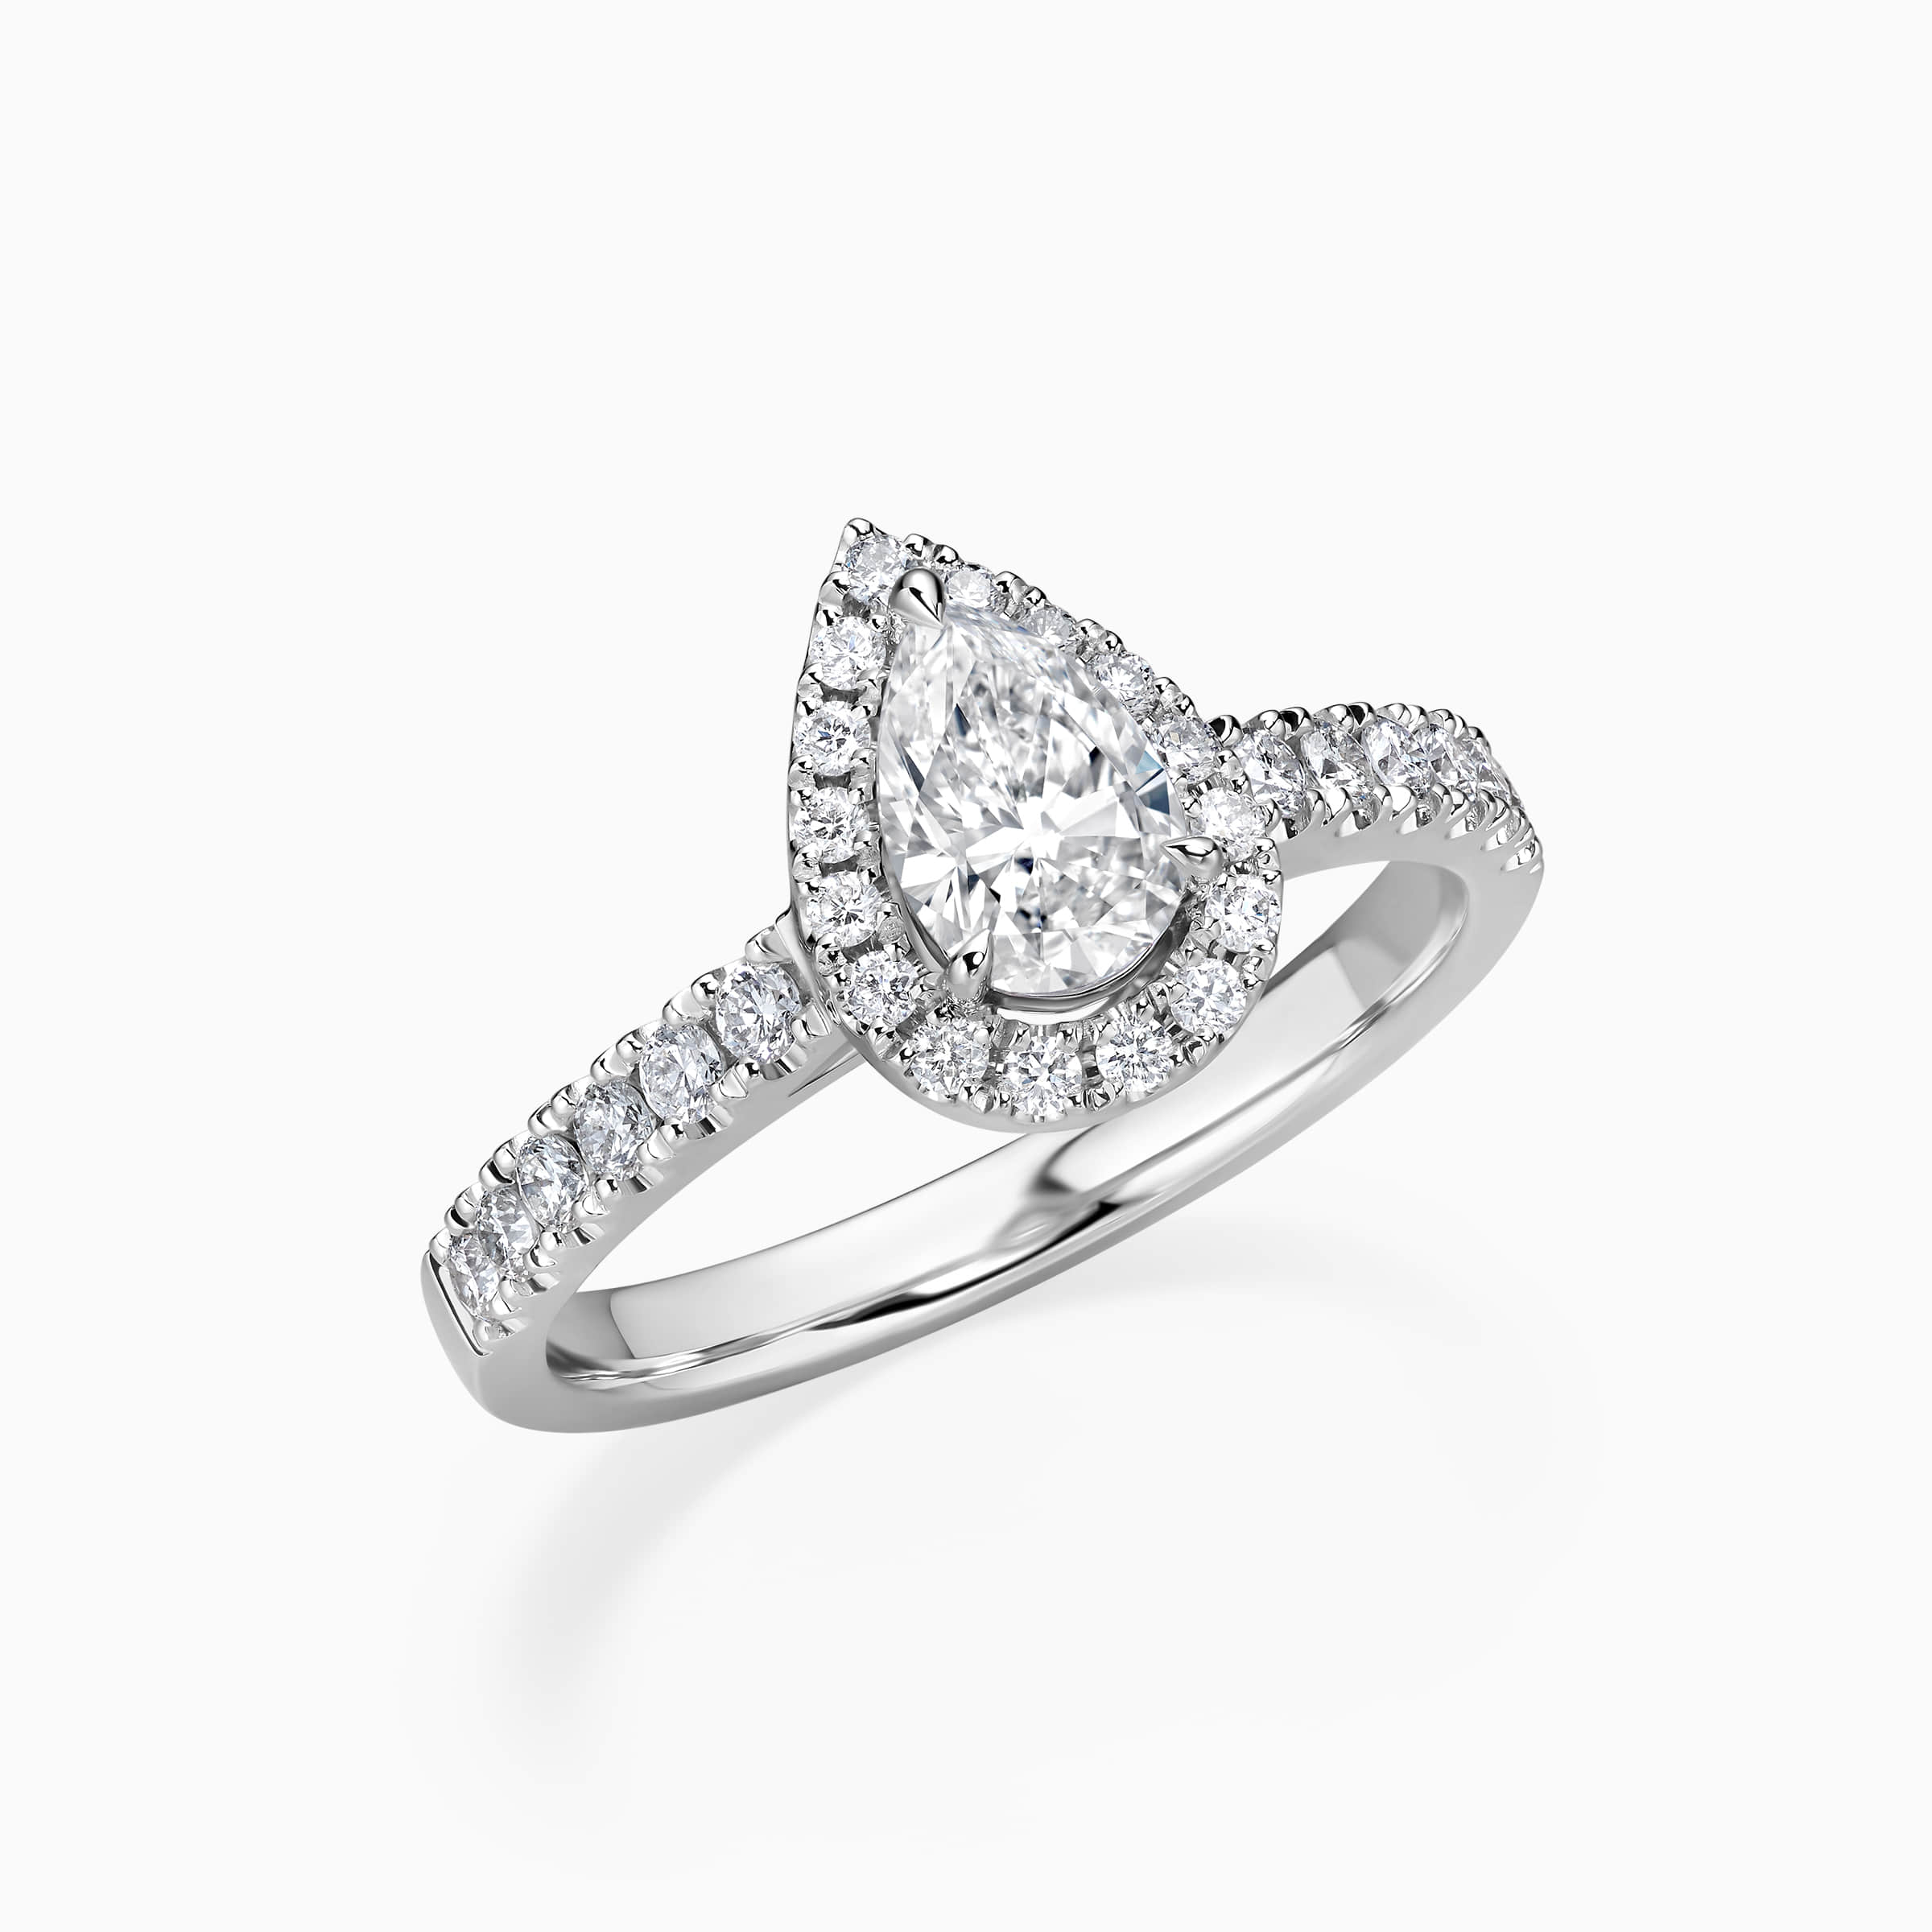 Darry Ring teardrop engagement ring in platinum